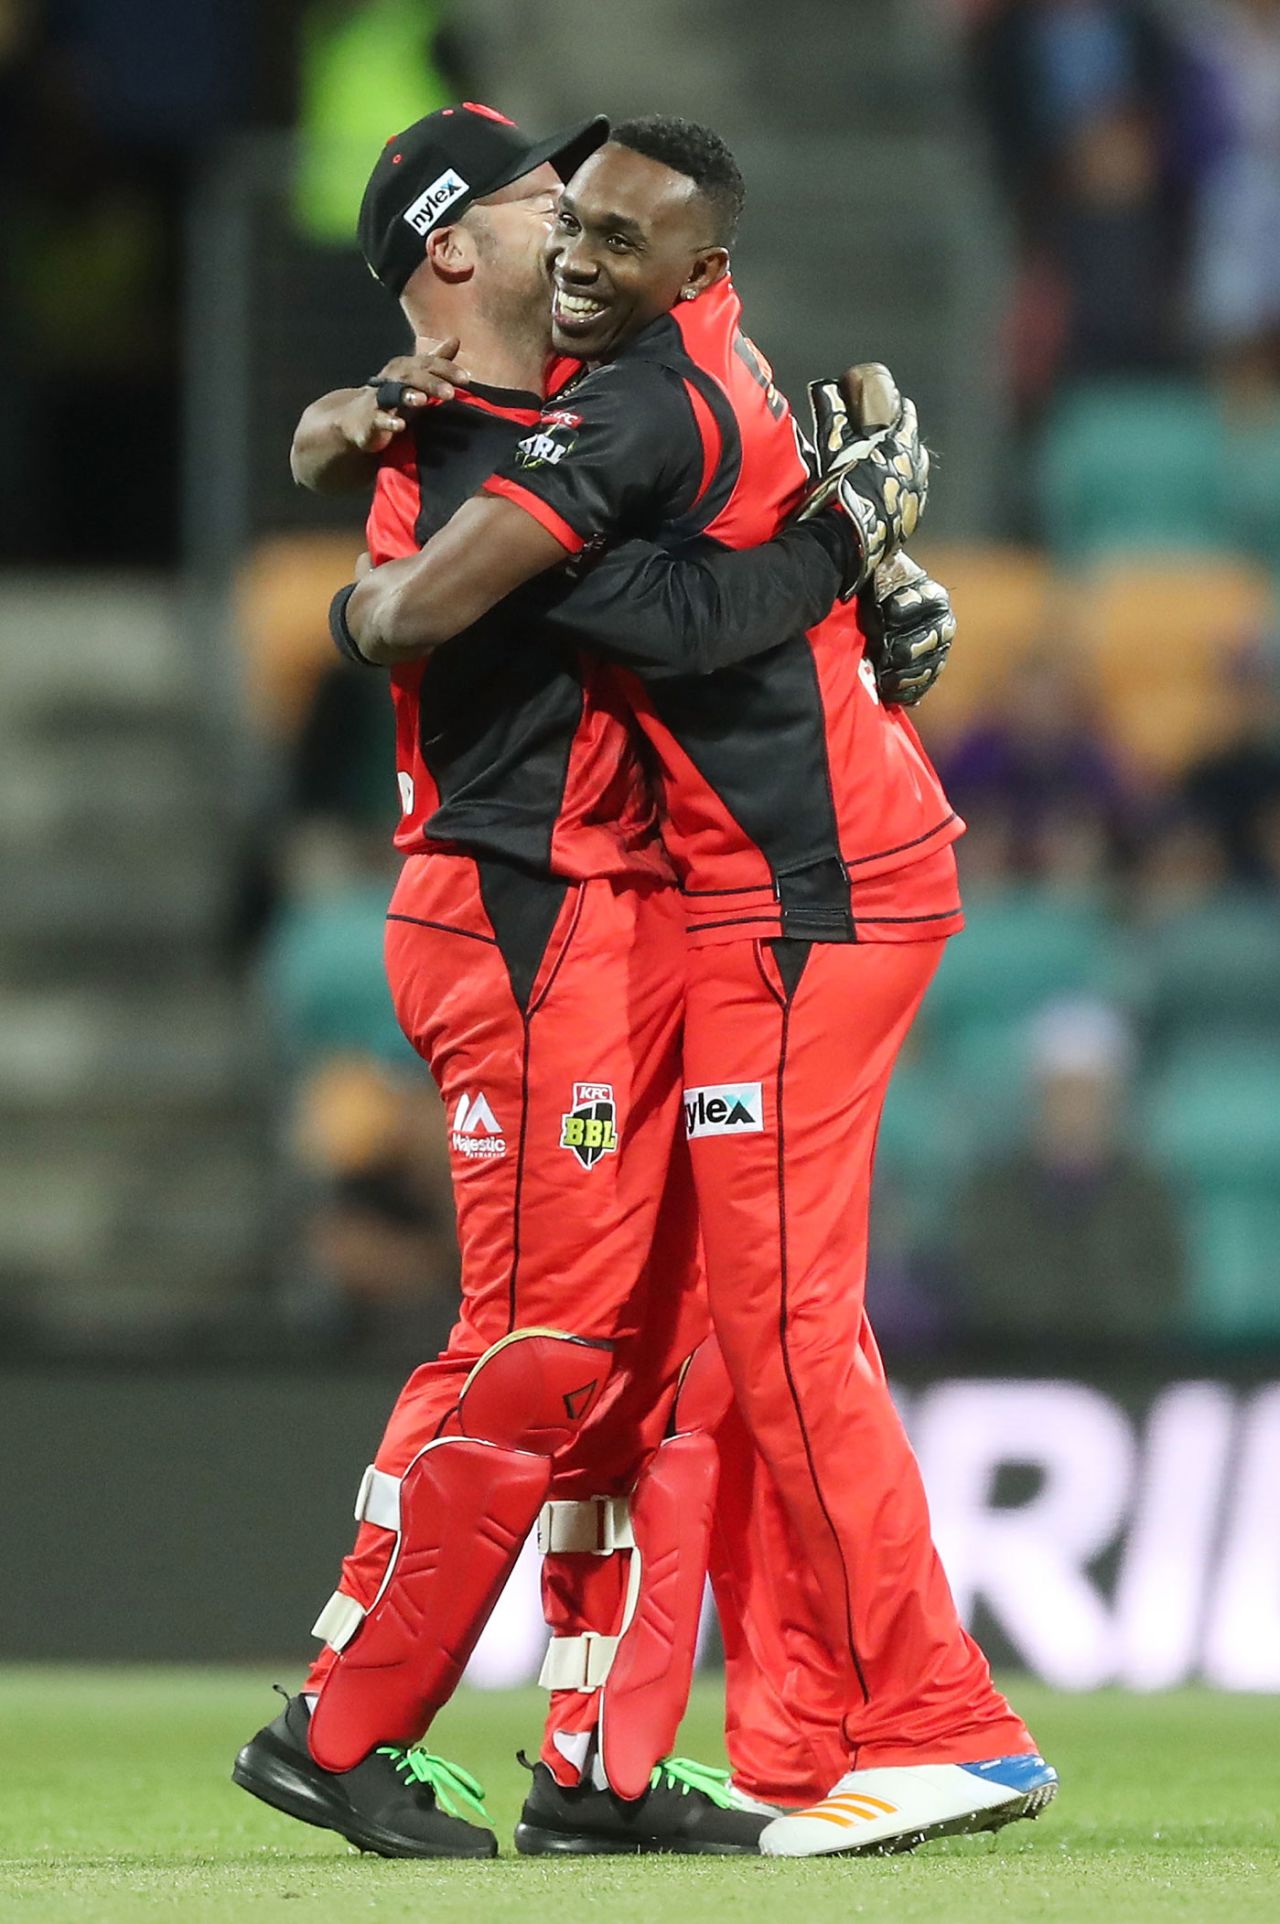 Dwayne Bravo celebrates after claiming his 400th T20 wicket, Hobart Hurricanes v Melbourne Renegades, Big Bash League 2017-18, Hobart, December 21, 2017